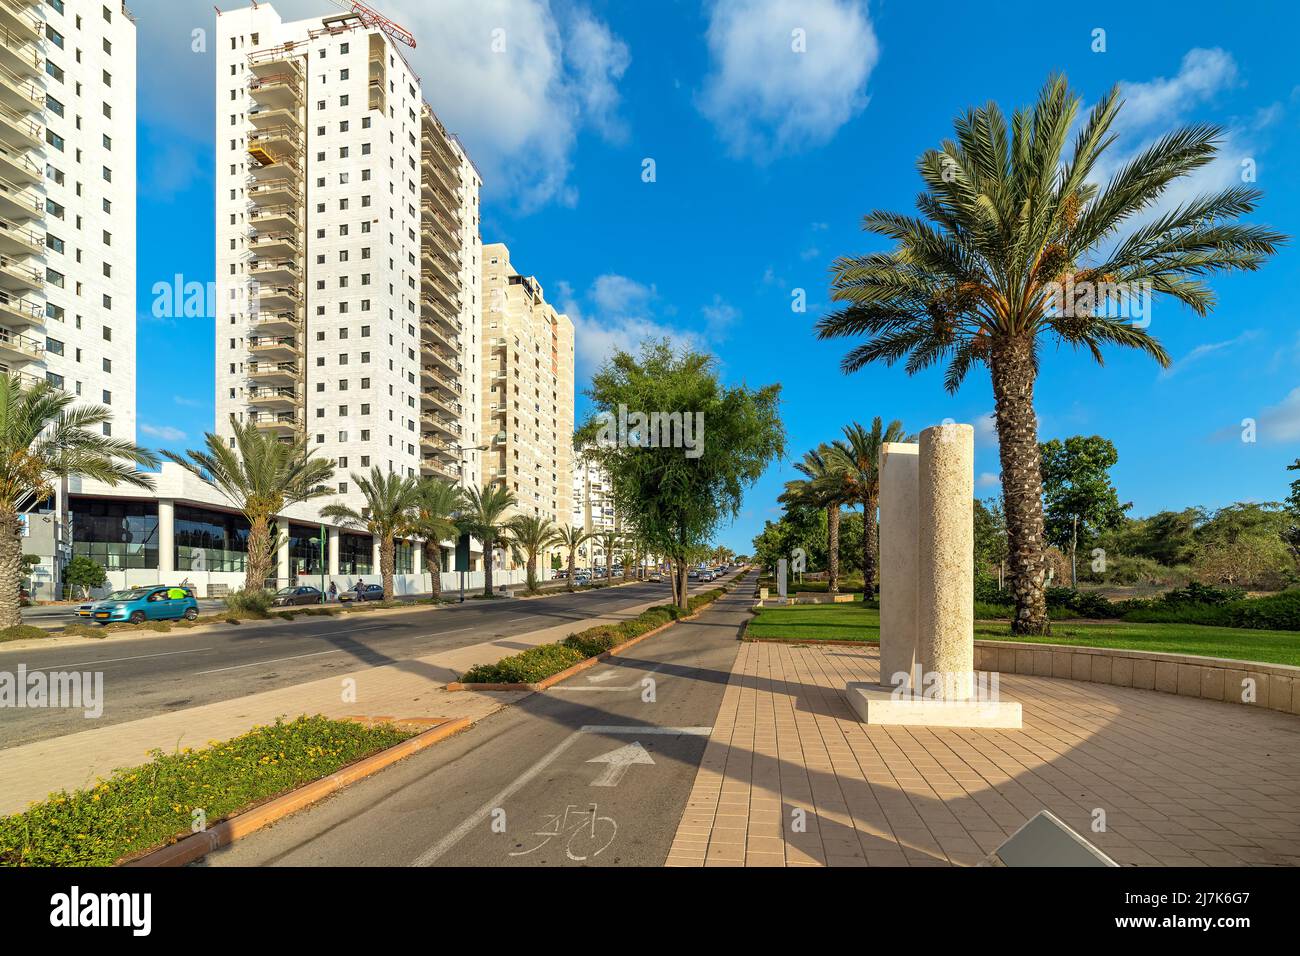 Sidewalk and urban road along multistory residential buildings under blue sky in Ashkelon, Israel. Stock Photo